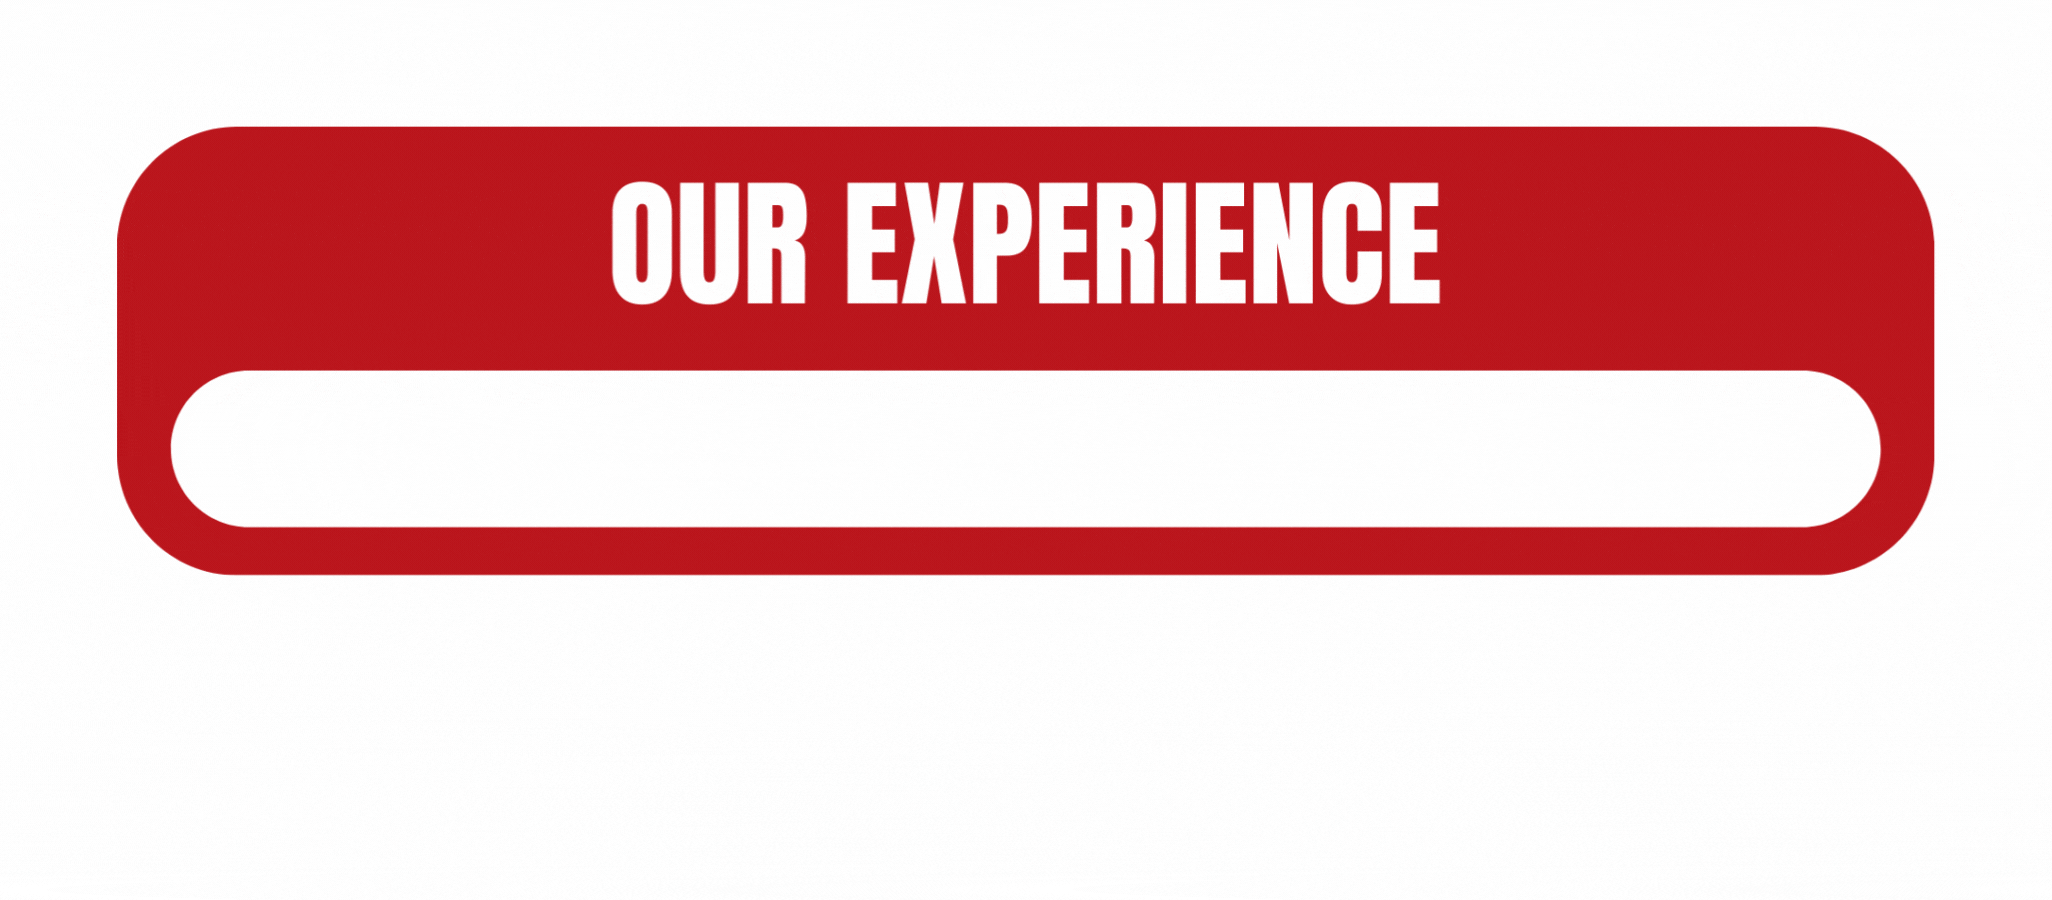 Experiance_Bizbuddy digital marketing Services